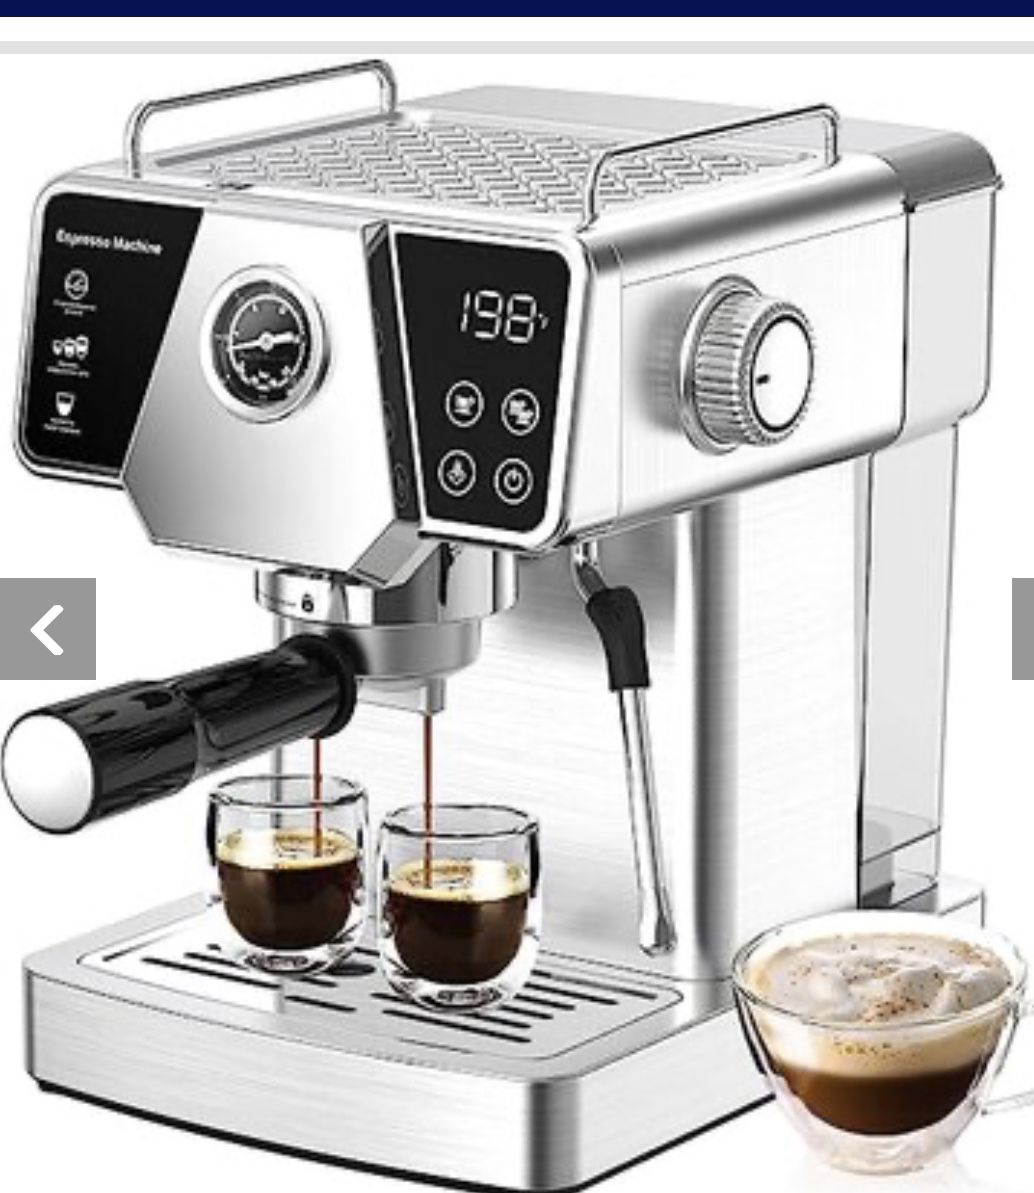 Espresso Machine for Sale in Cleveland, OH - OfferUp